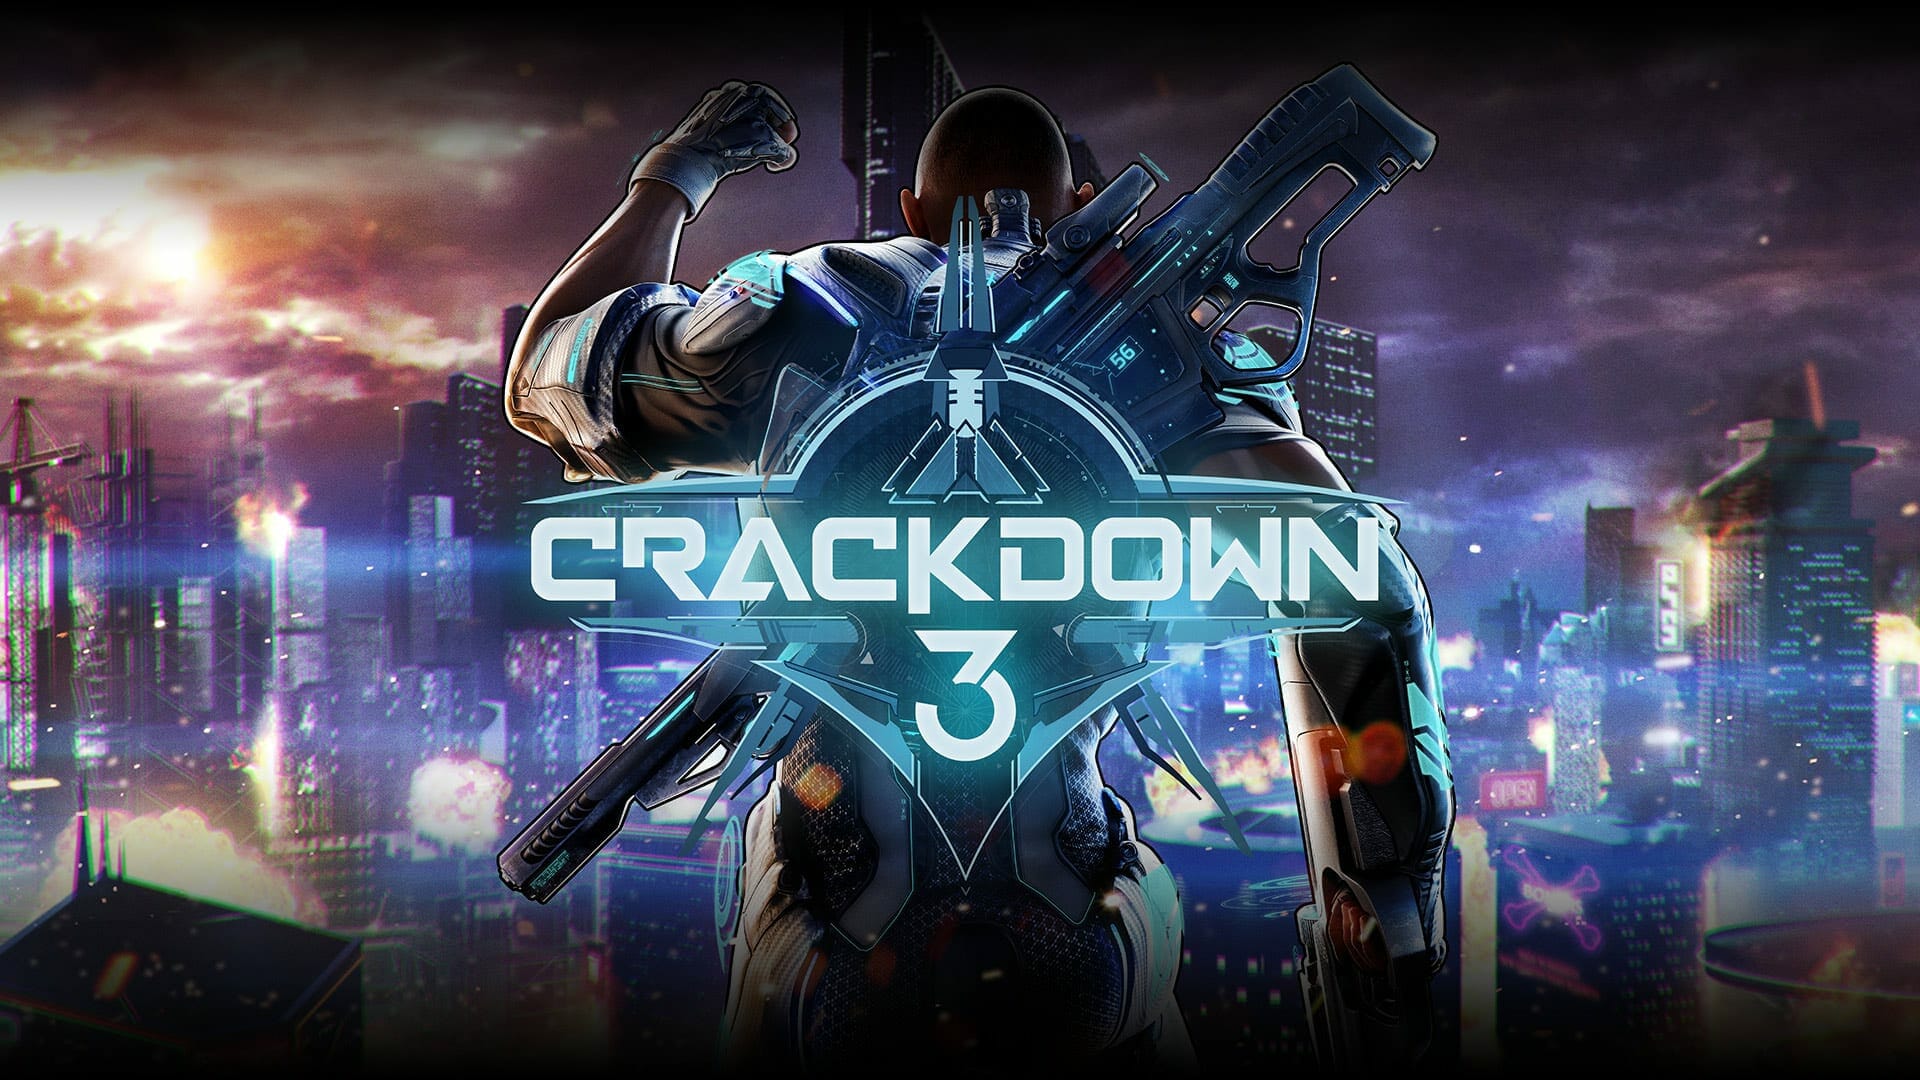 Crackdown 3 release date